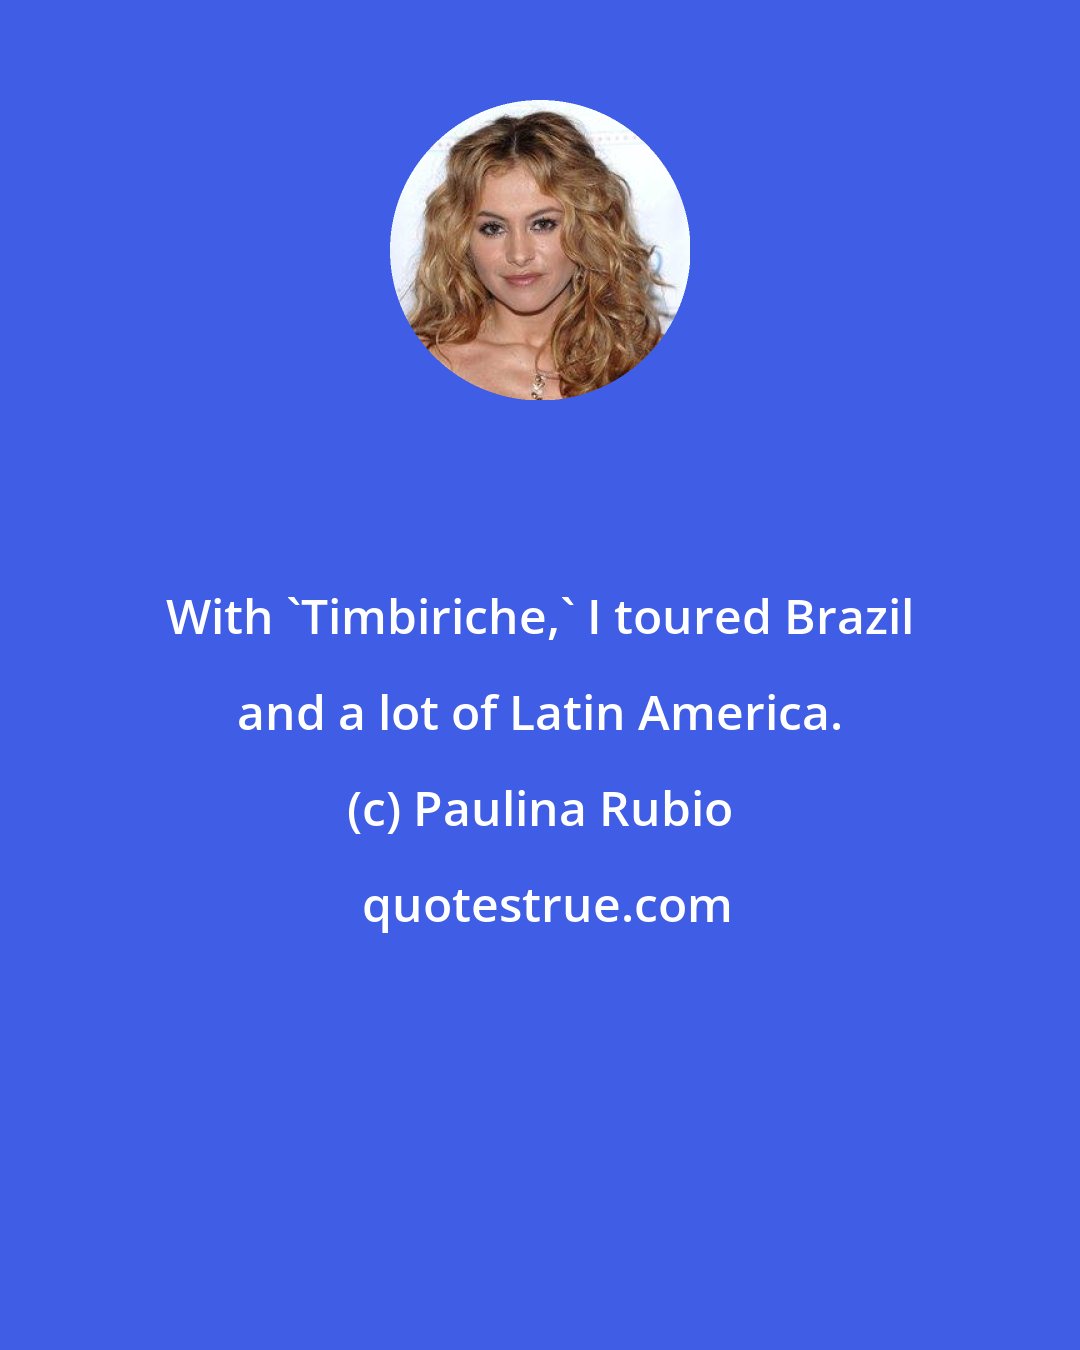 Paulina Rubio: With 'Timbiriche,' I toured Brazil and a lot of Latin America.